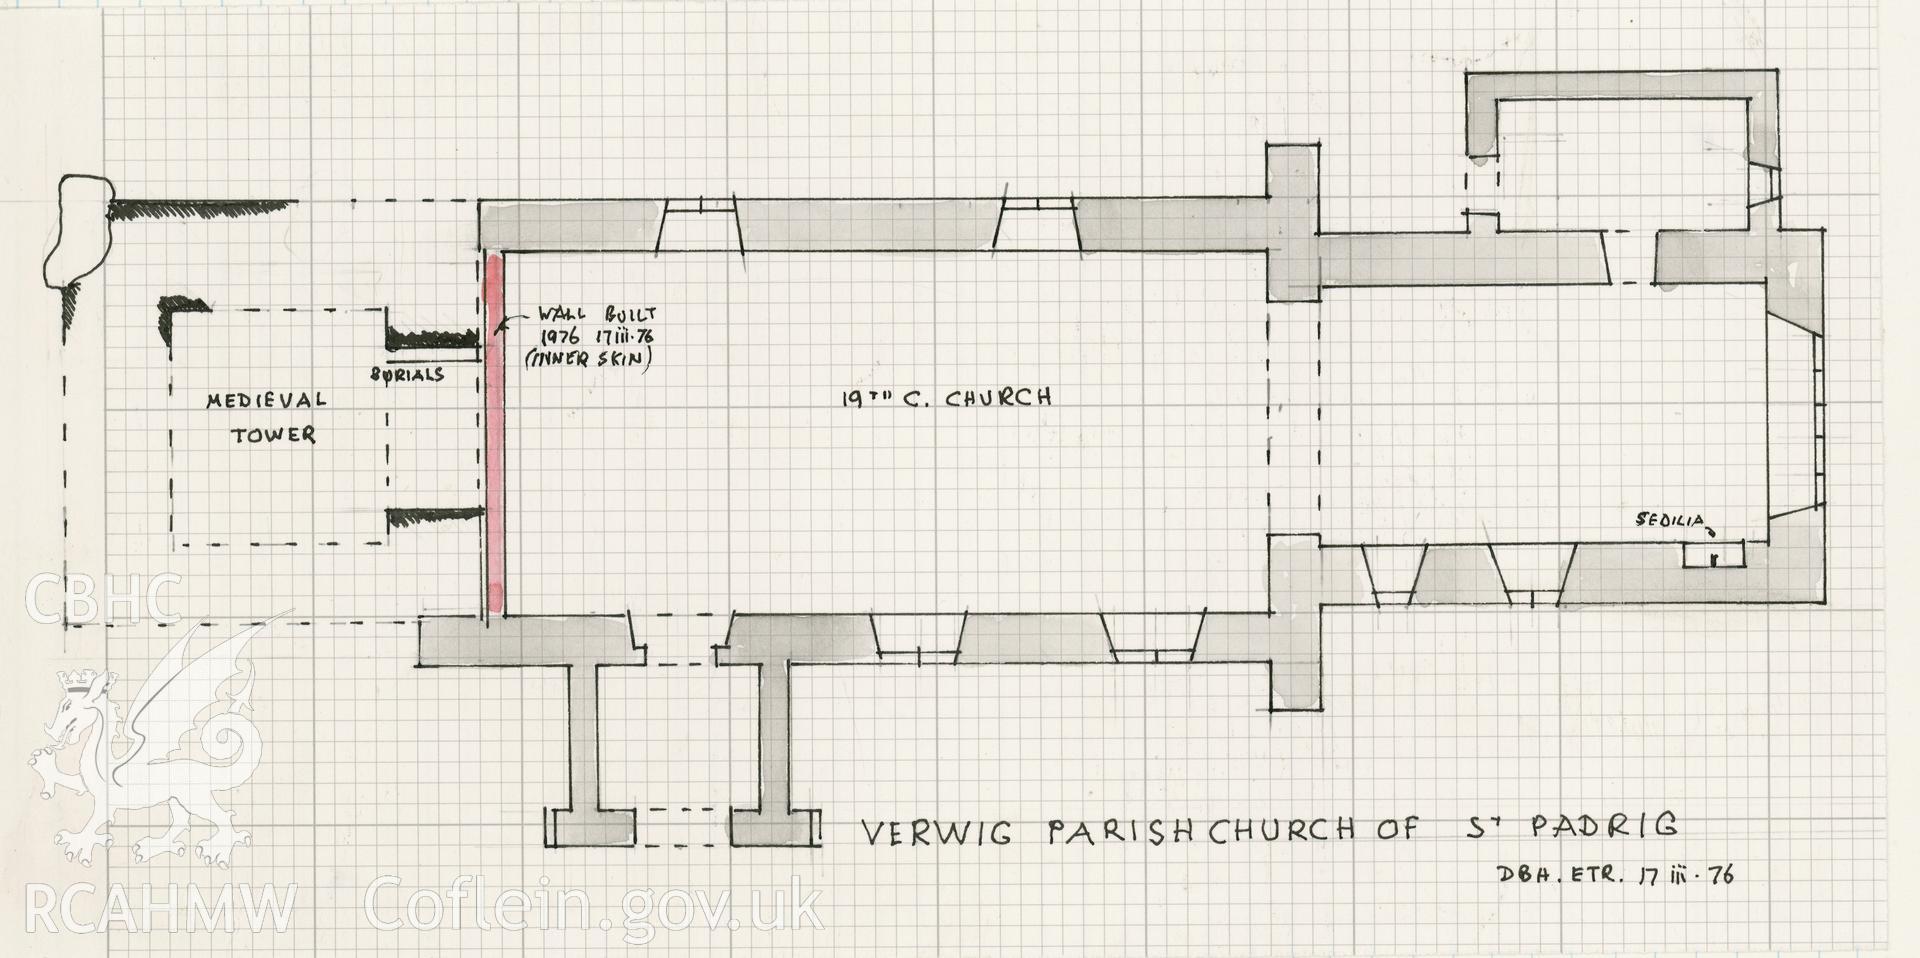 Digital copy of a sketch plan of St Pedrog's church, Y Ferwig produced by Douglas Hague and Bunty Richards, March 1976